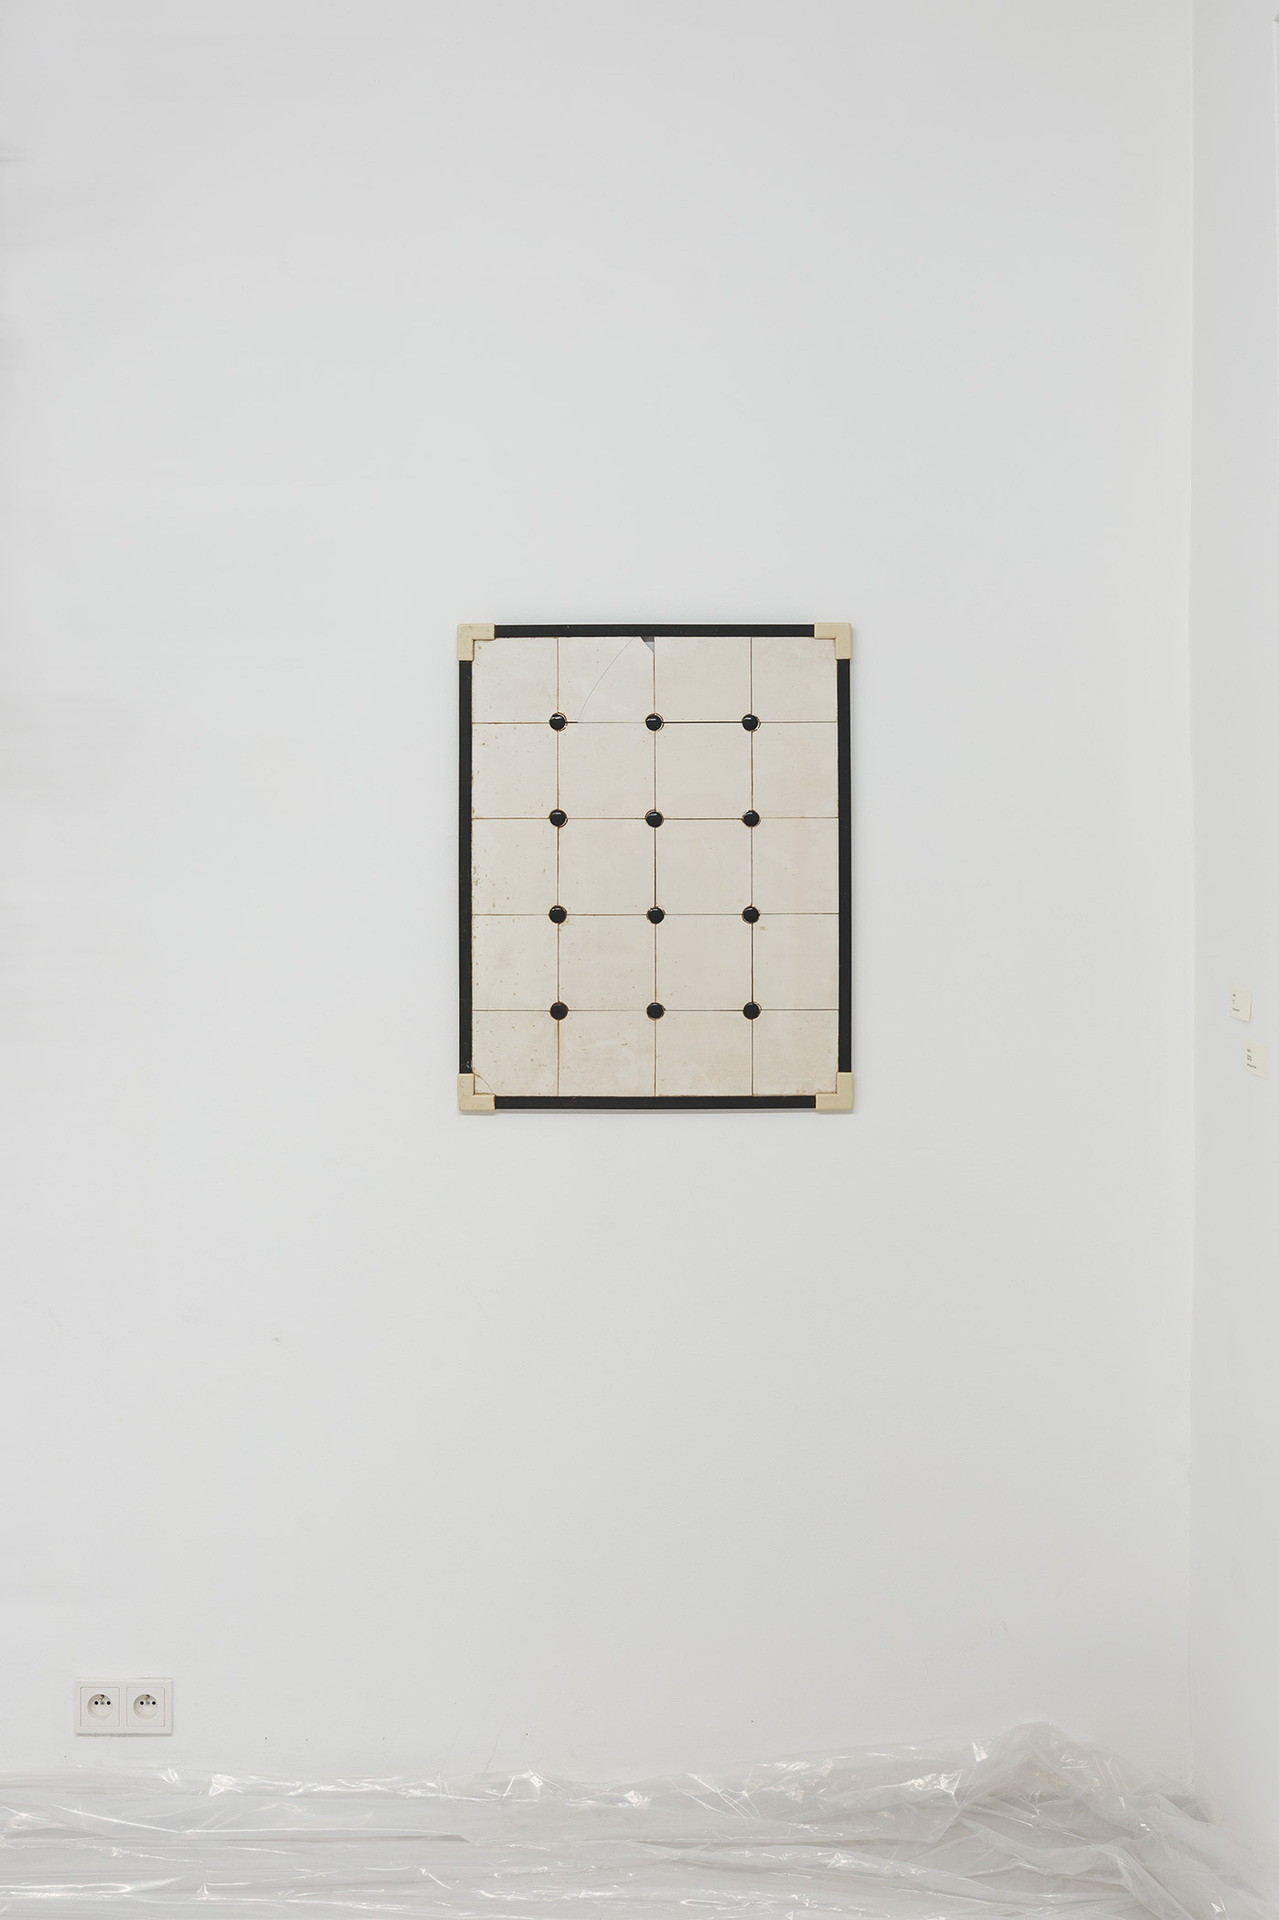 Ruth Tauer, “Slipped down”, 1988, ceramic tiles.